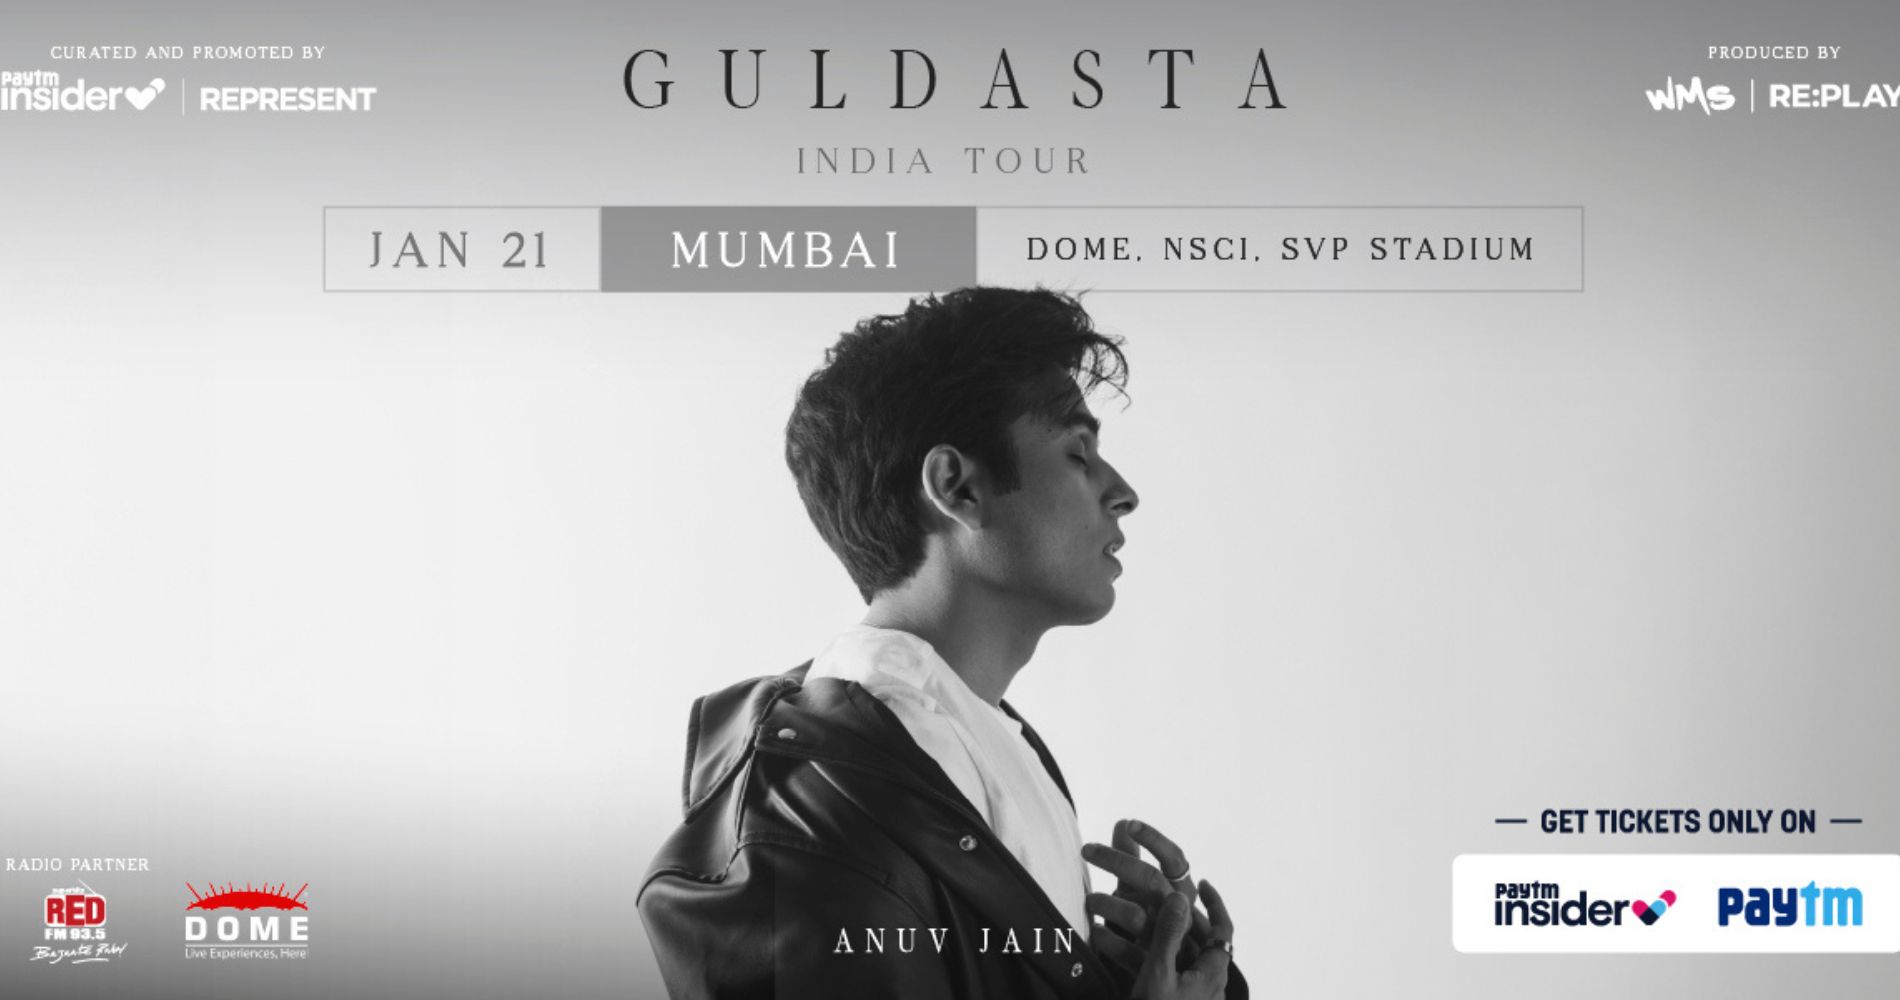 Anuv Jains Guldatsa Tour Sells Over 35,000+ Tickets